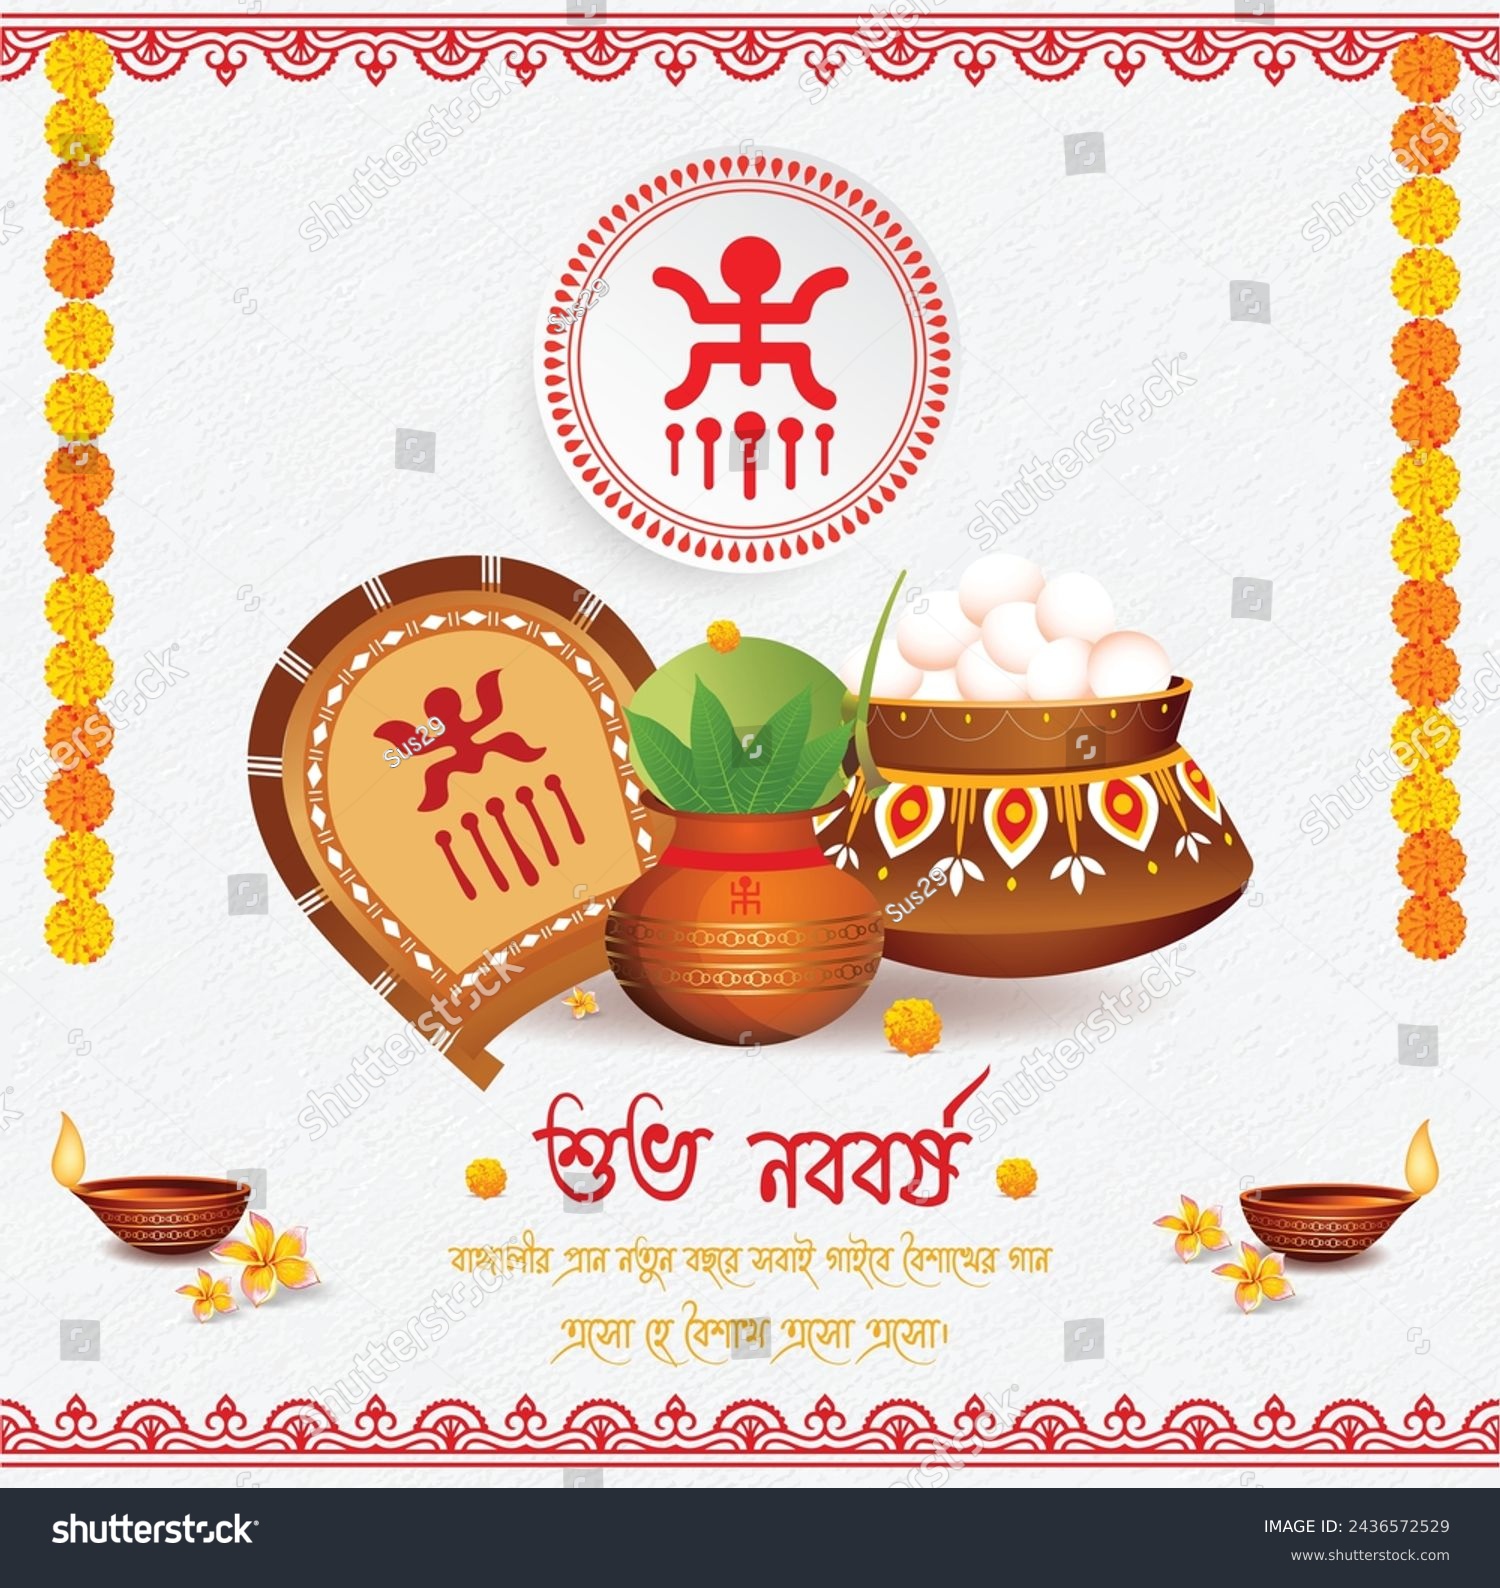 SVG of Illustration of bengali new year with Bengali text Subho Nababarsha svg